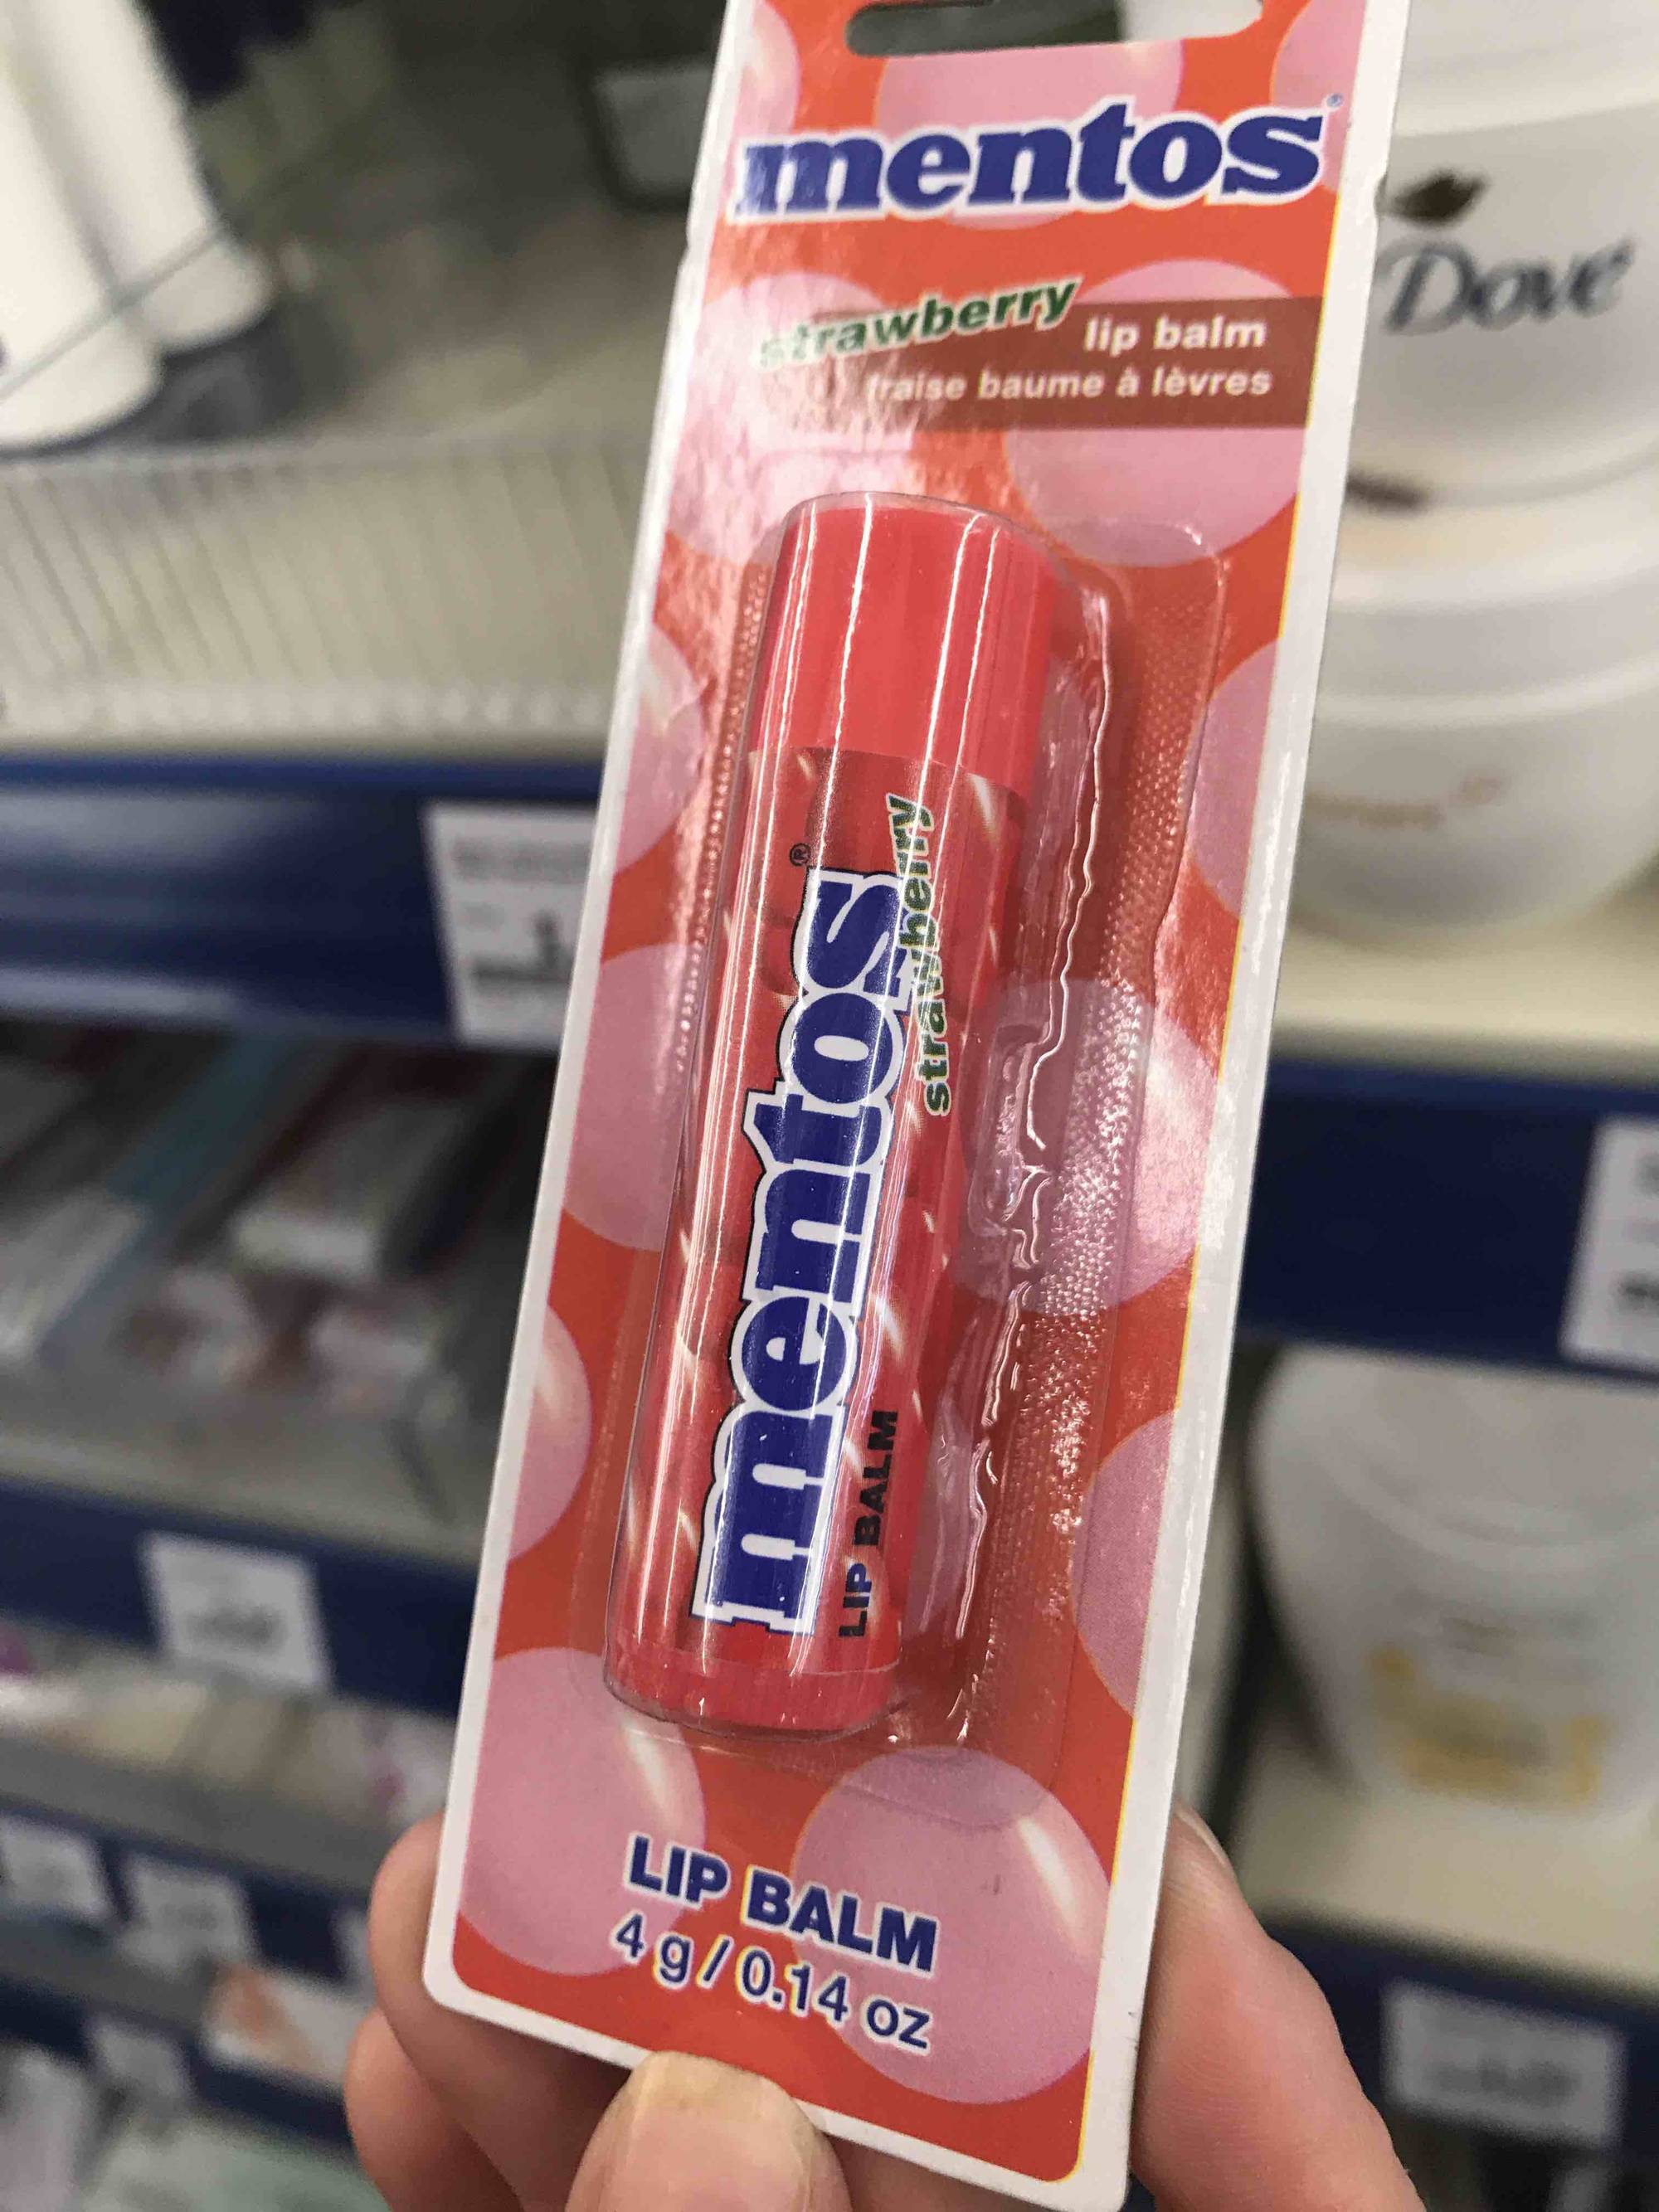 MENTOS - Lip balm - Strawberry 